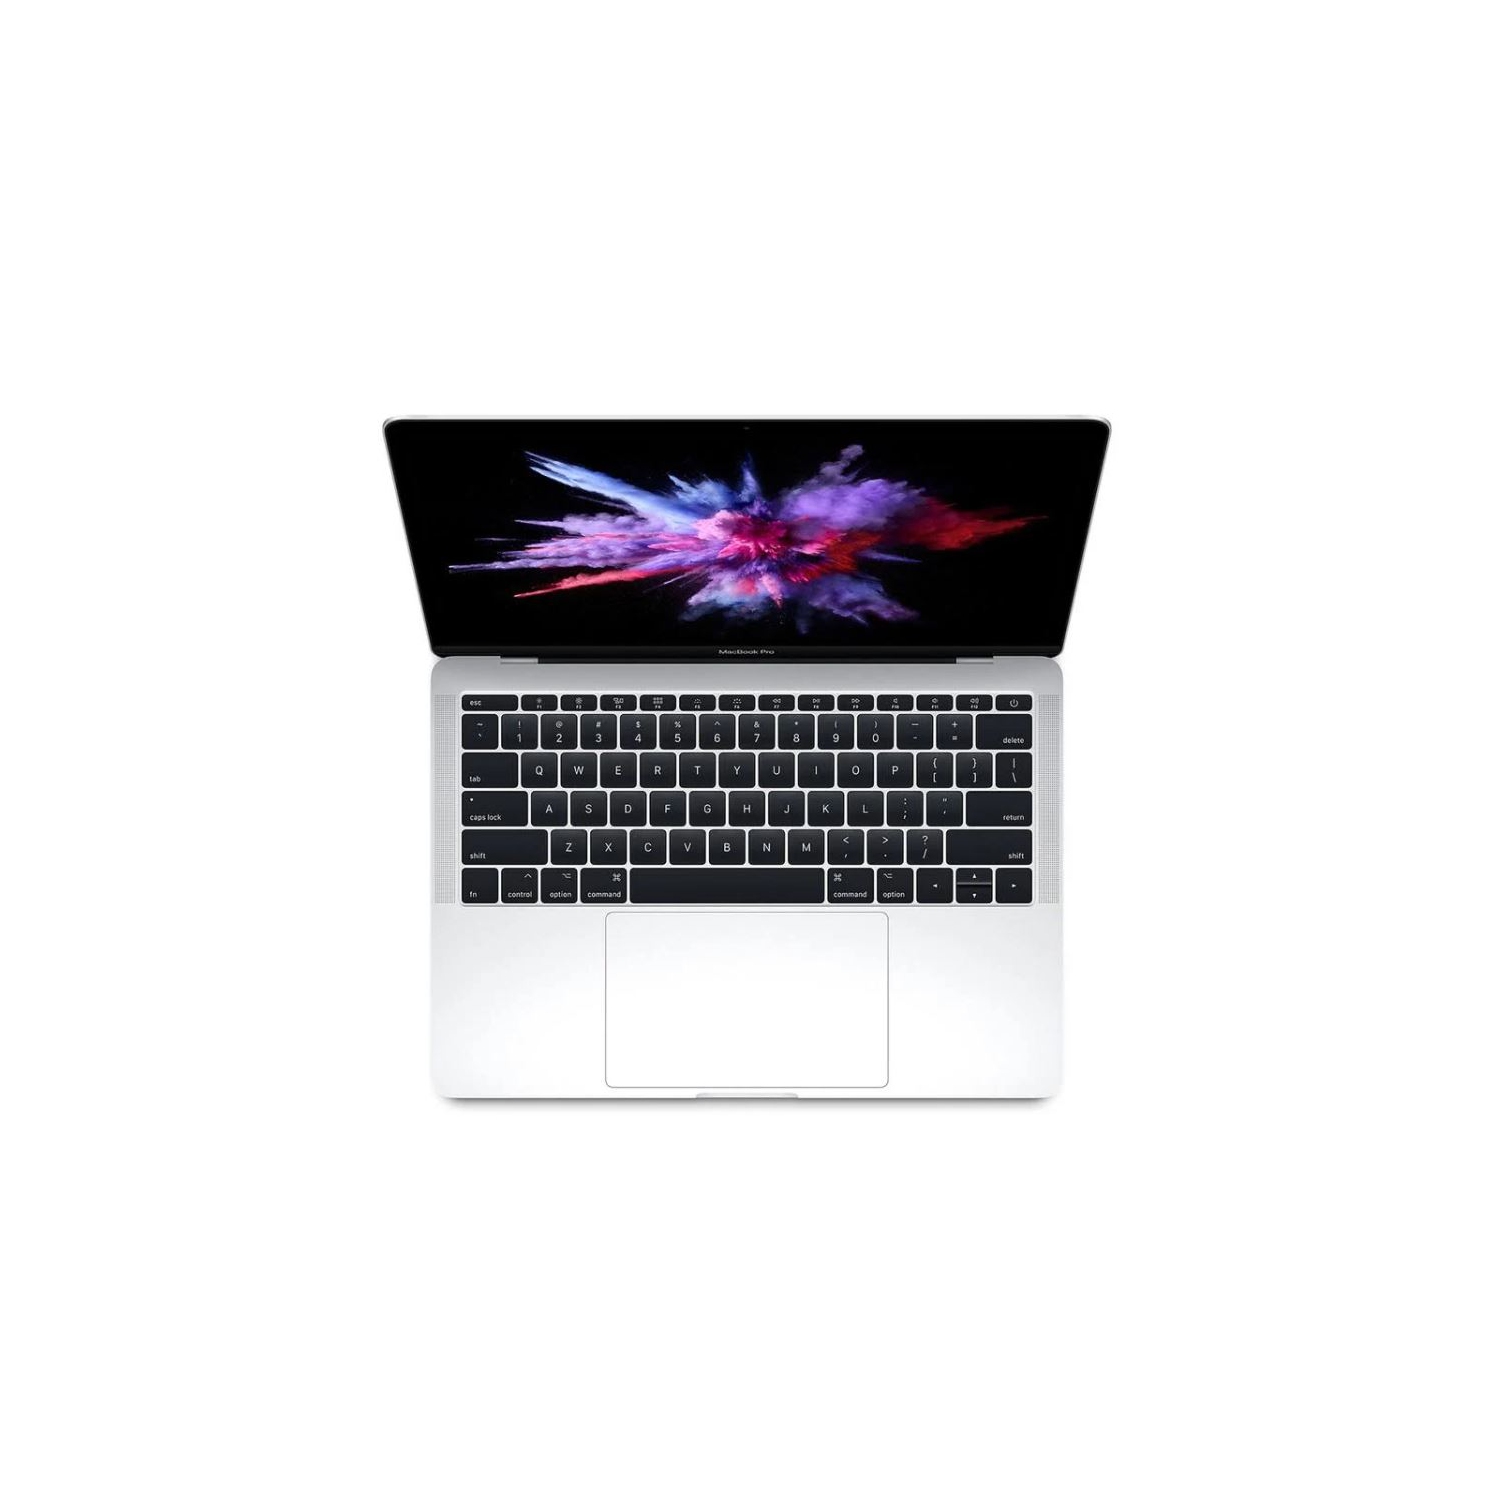 Refurbished (Excellent) - Apple Macbook Pro 13.3" i5 16GB 512GB SSD - US QWERTY Keyboard - Mpxq2ll/a Mid-2017 - Silver